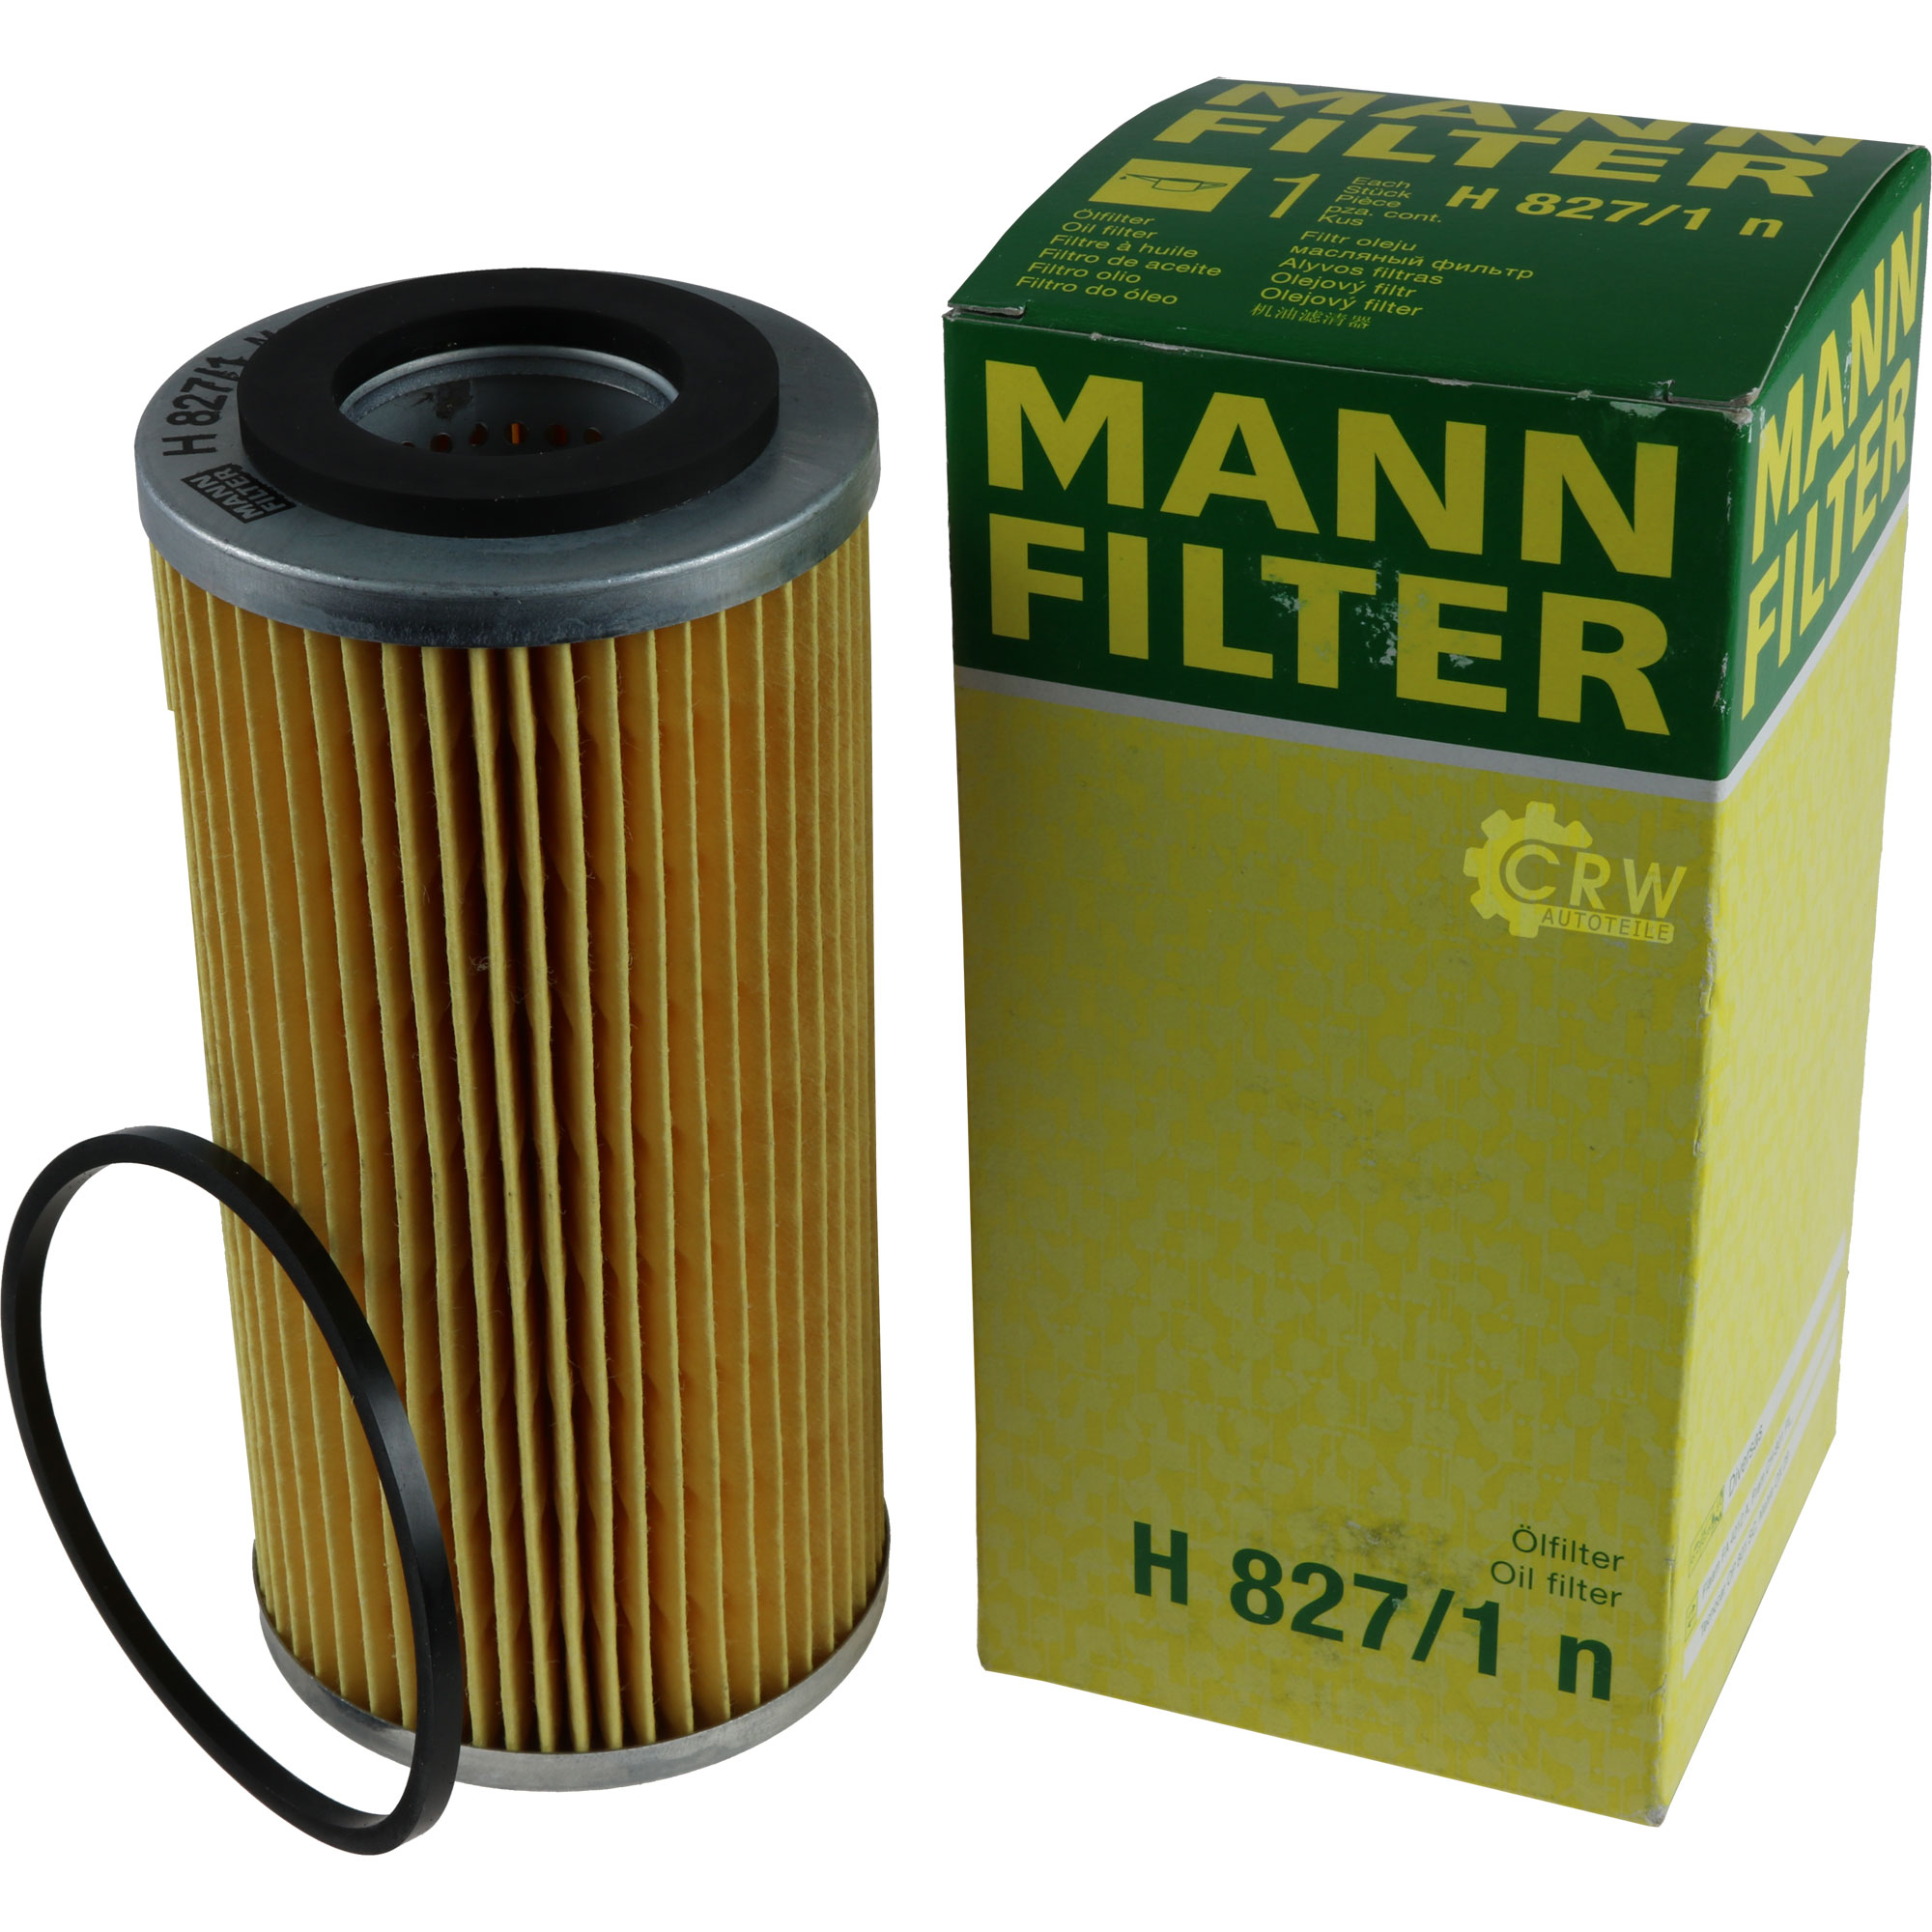 MANN-FILTER Ölfilter H 827/1 n Oil Filter